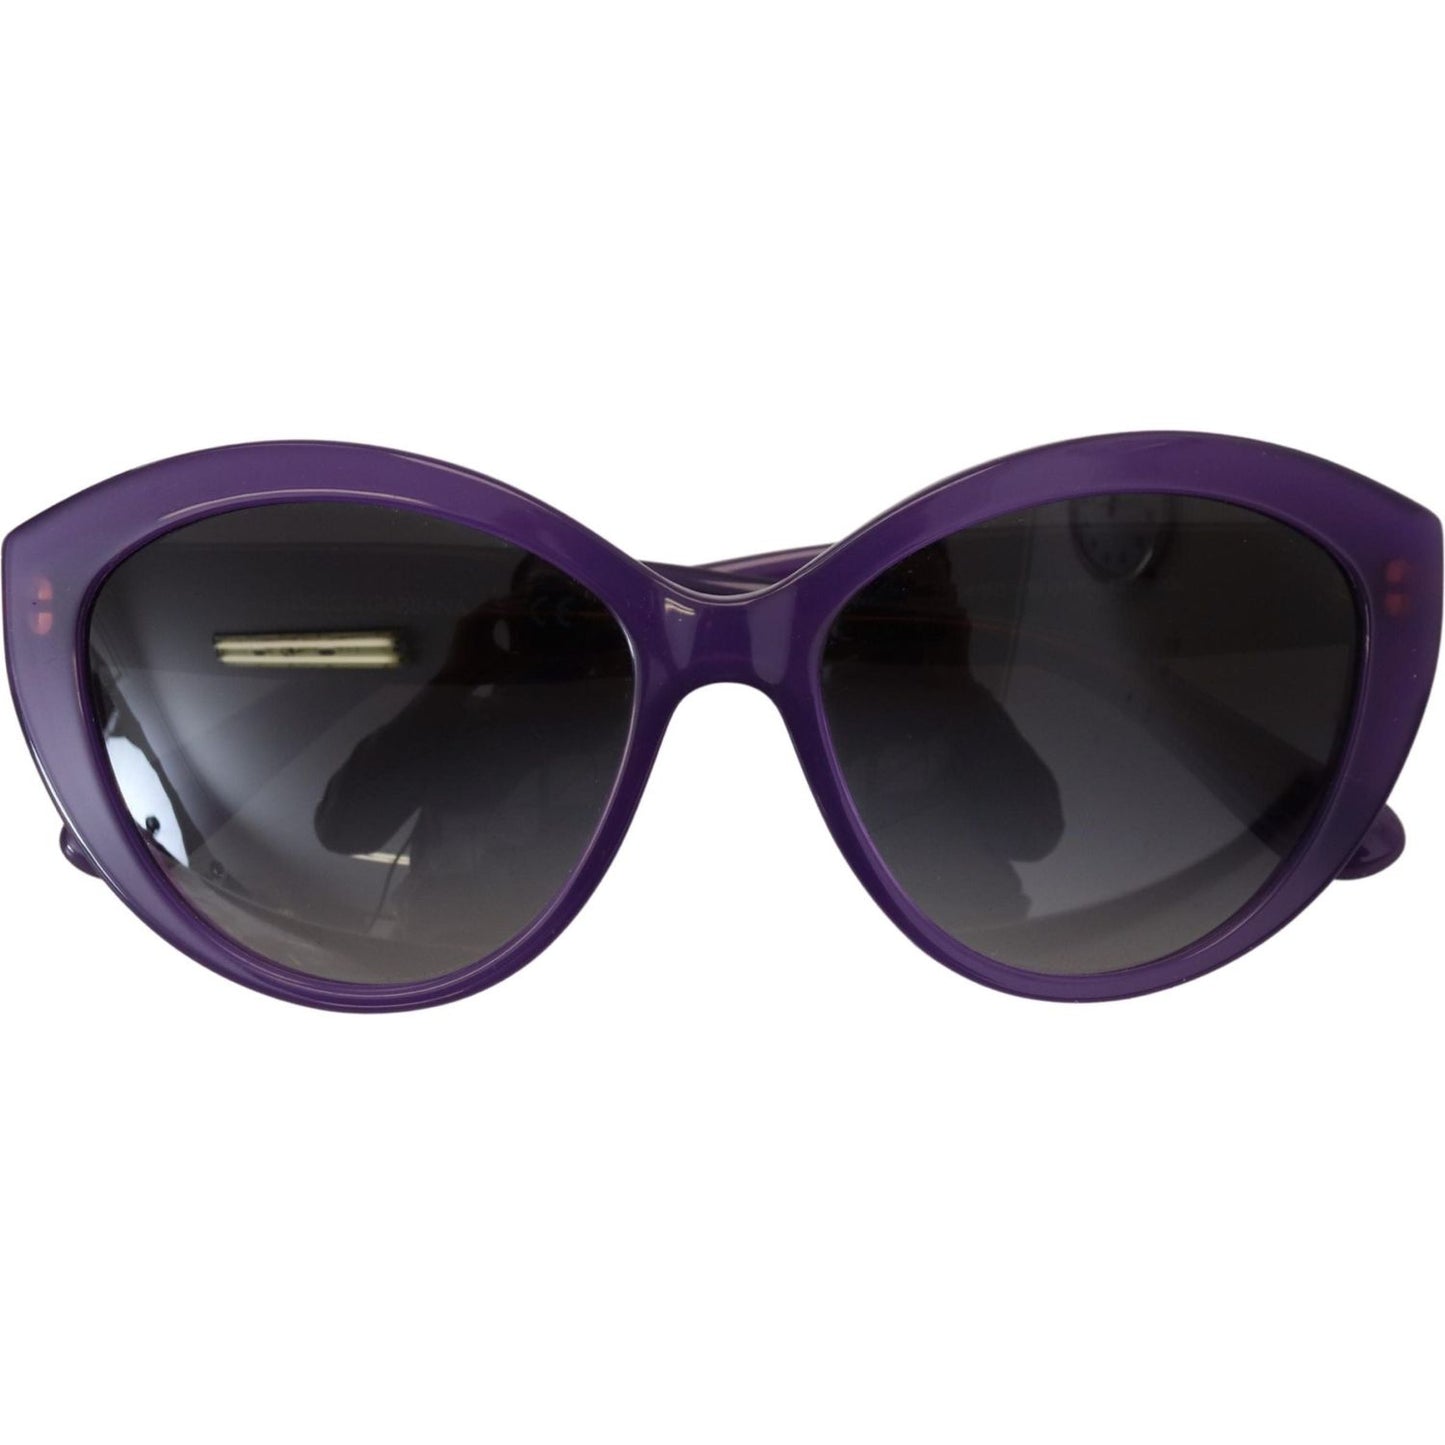 Dolce & Gabbana Chic Purple Cat-Eye Designer Sunglasses purple-translucent-cat-eye-frame-dg4239-sunglasses